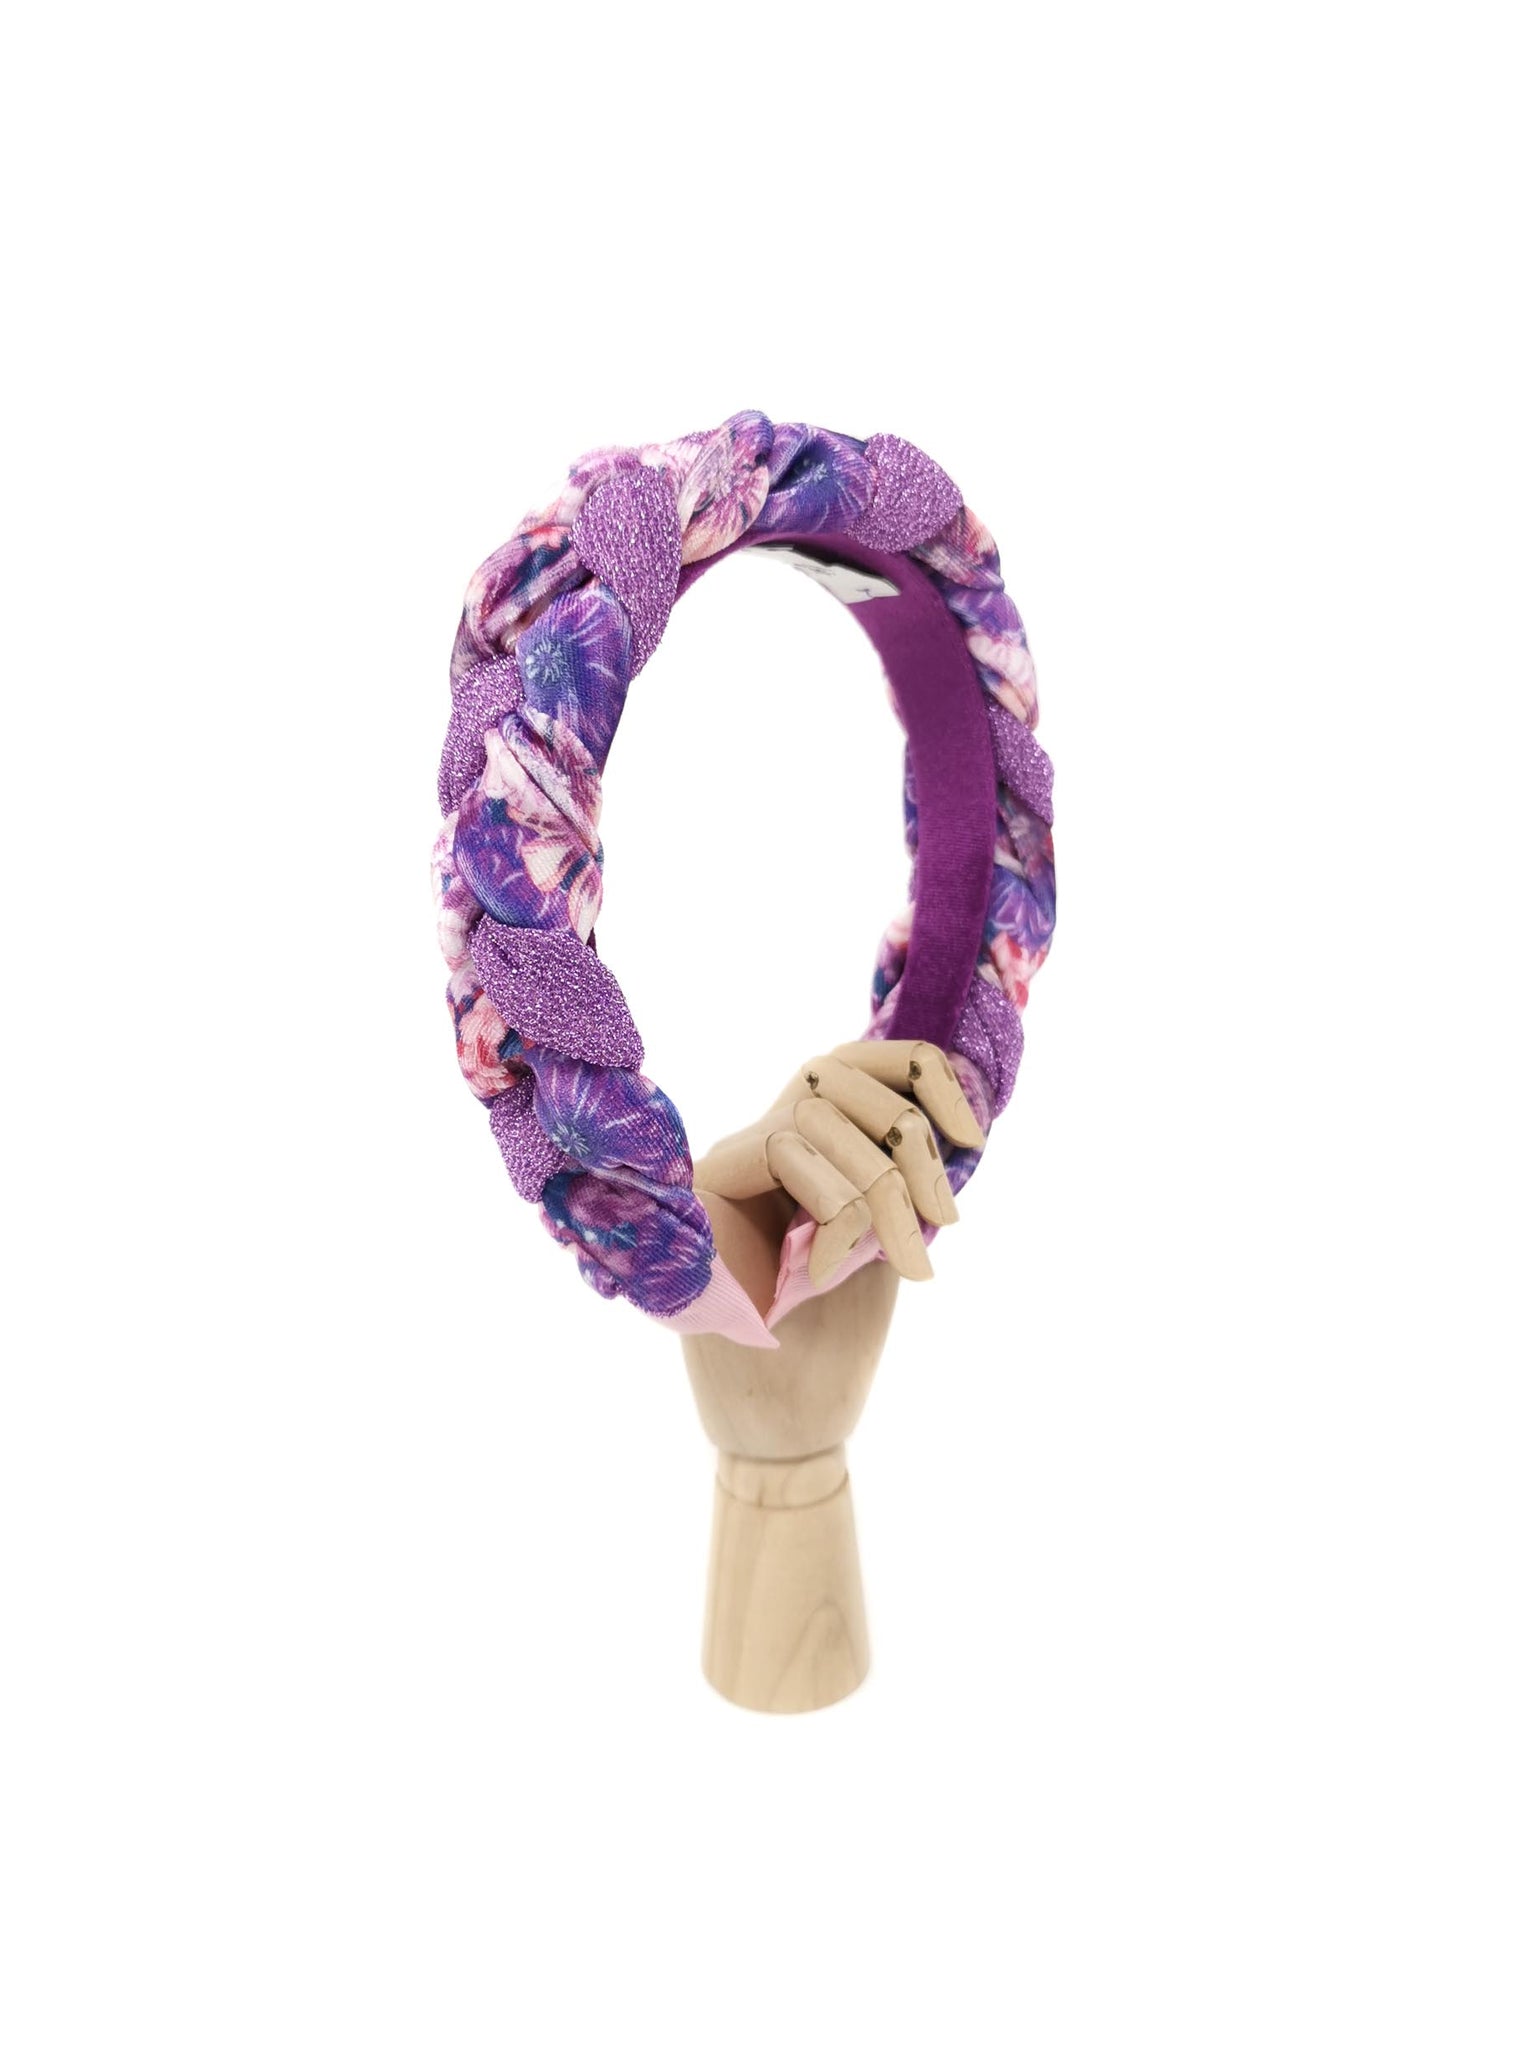 Frida headband with purple flower-patterned velvet braid and lilac lurex